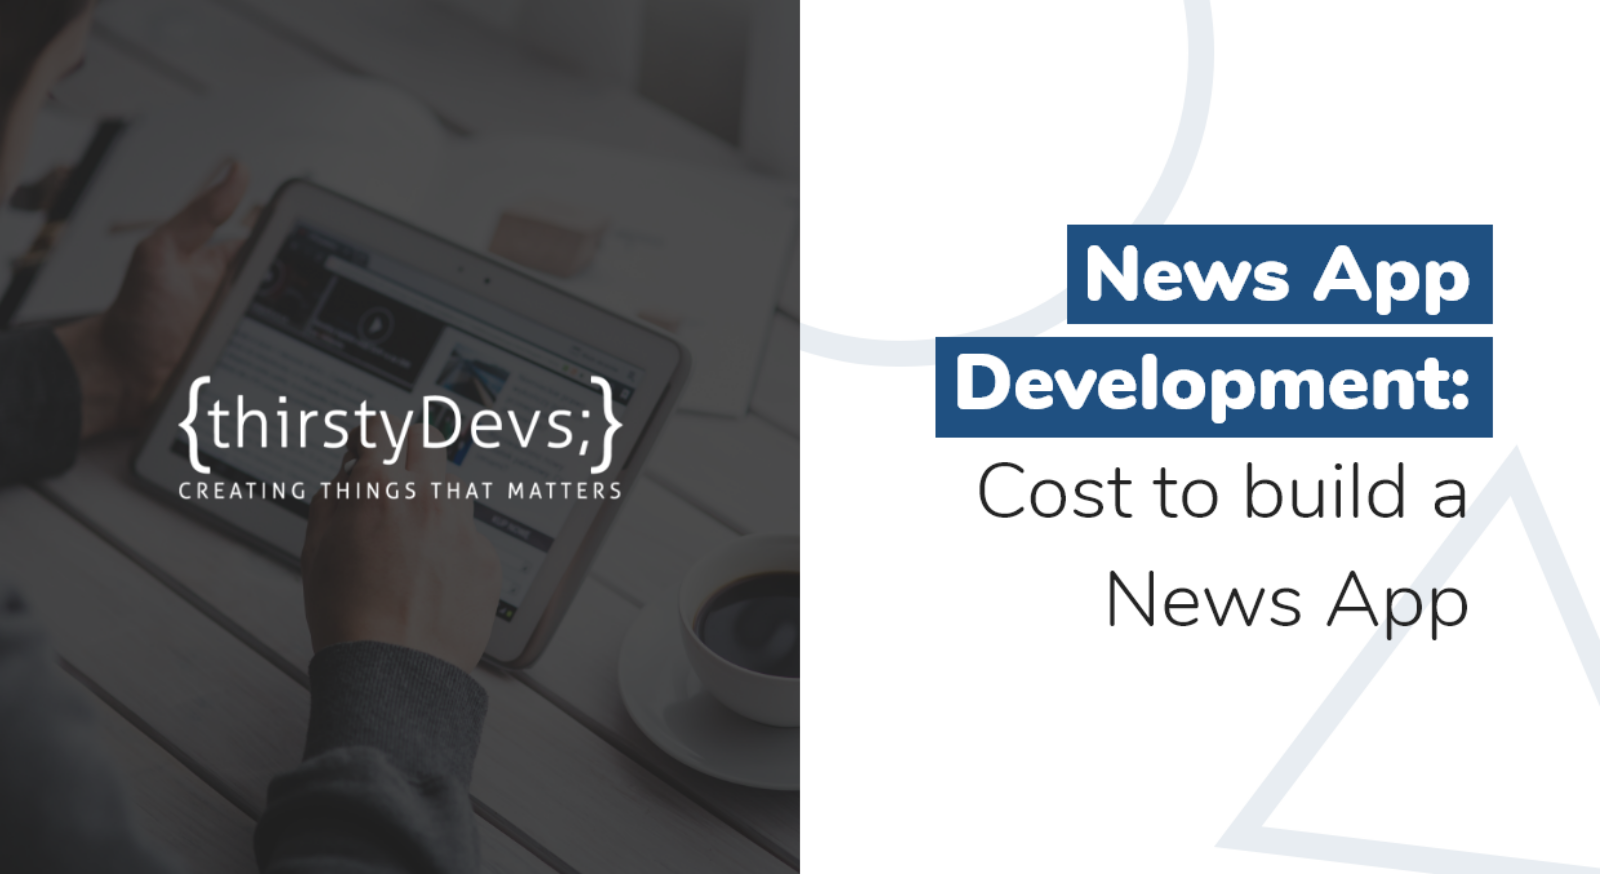 News App Development Cost to build a News App